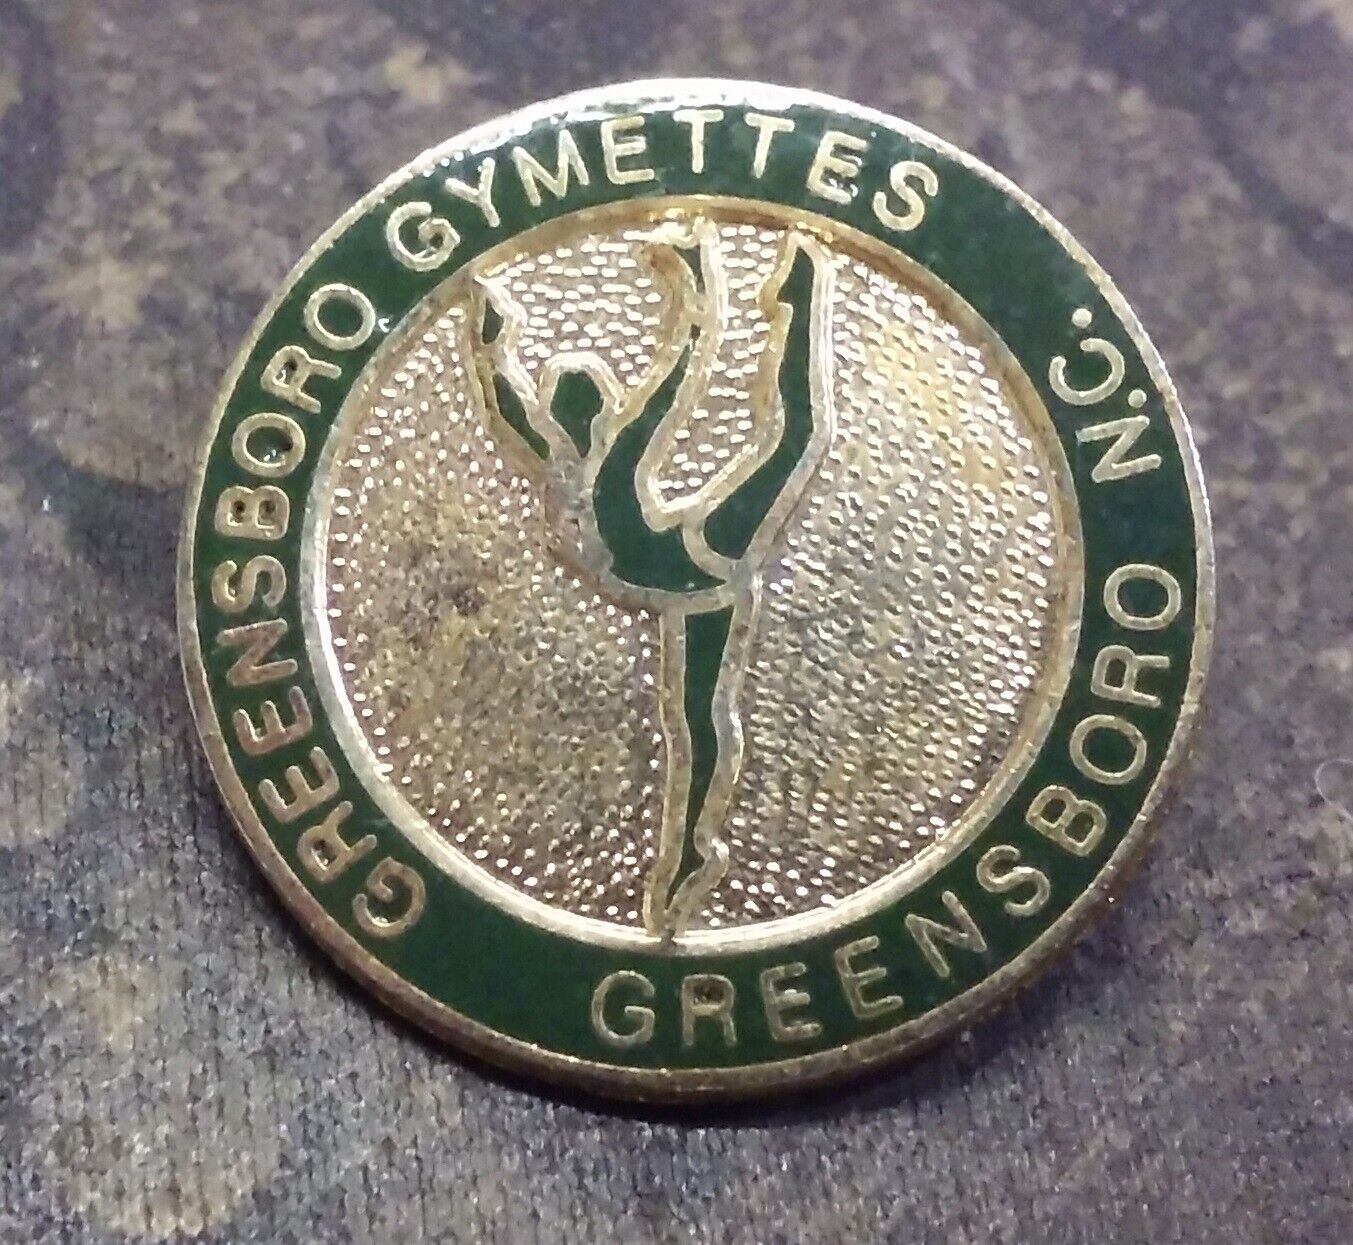 Greensboro Gymettes vintage pin badge Greensboro NC